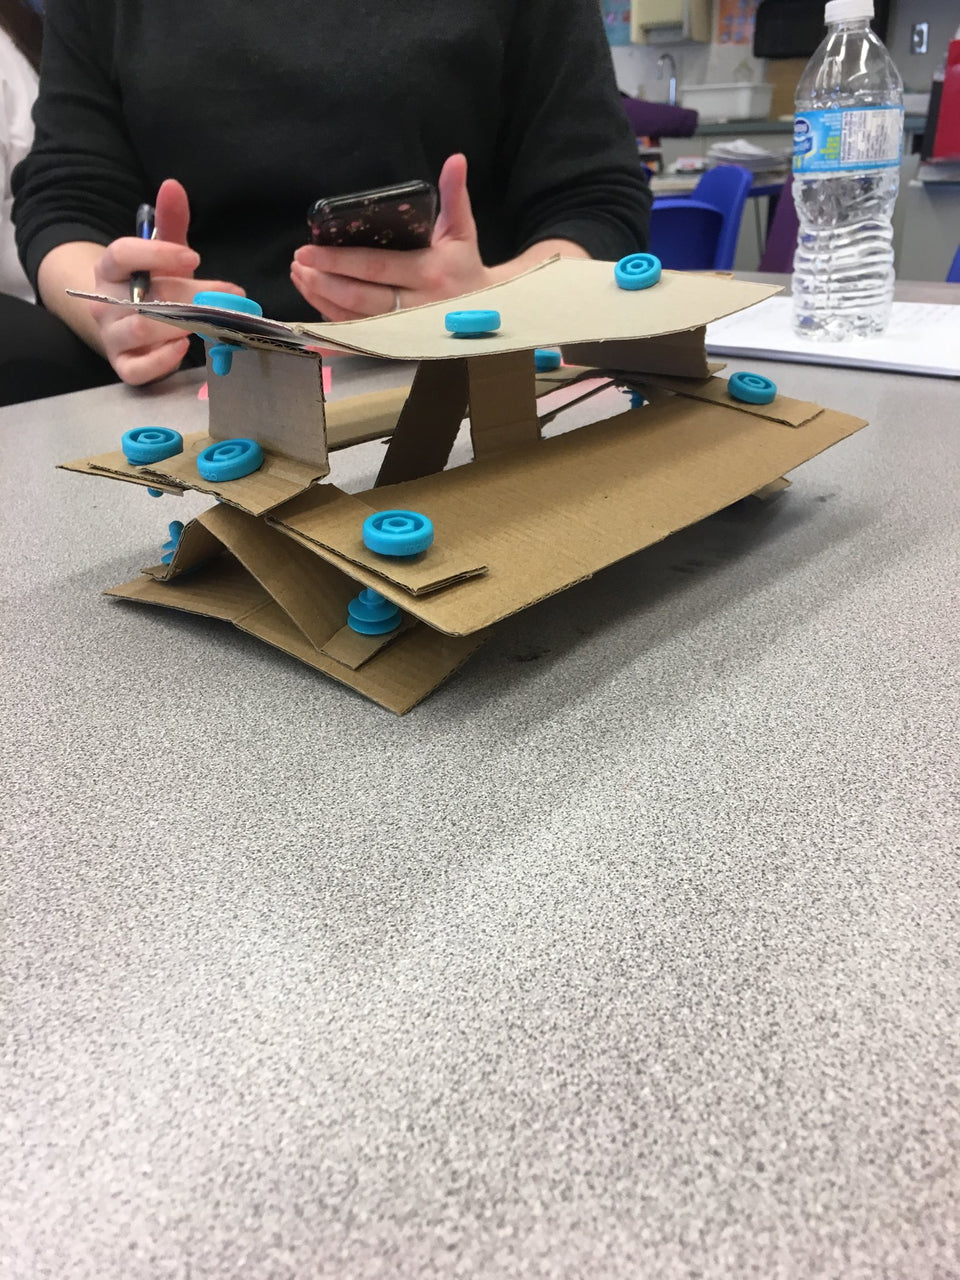 Makedo cardboard construction teacher training making a cardboard bench model.